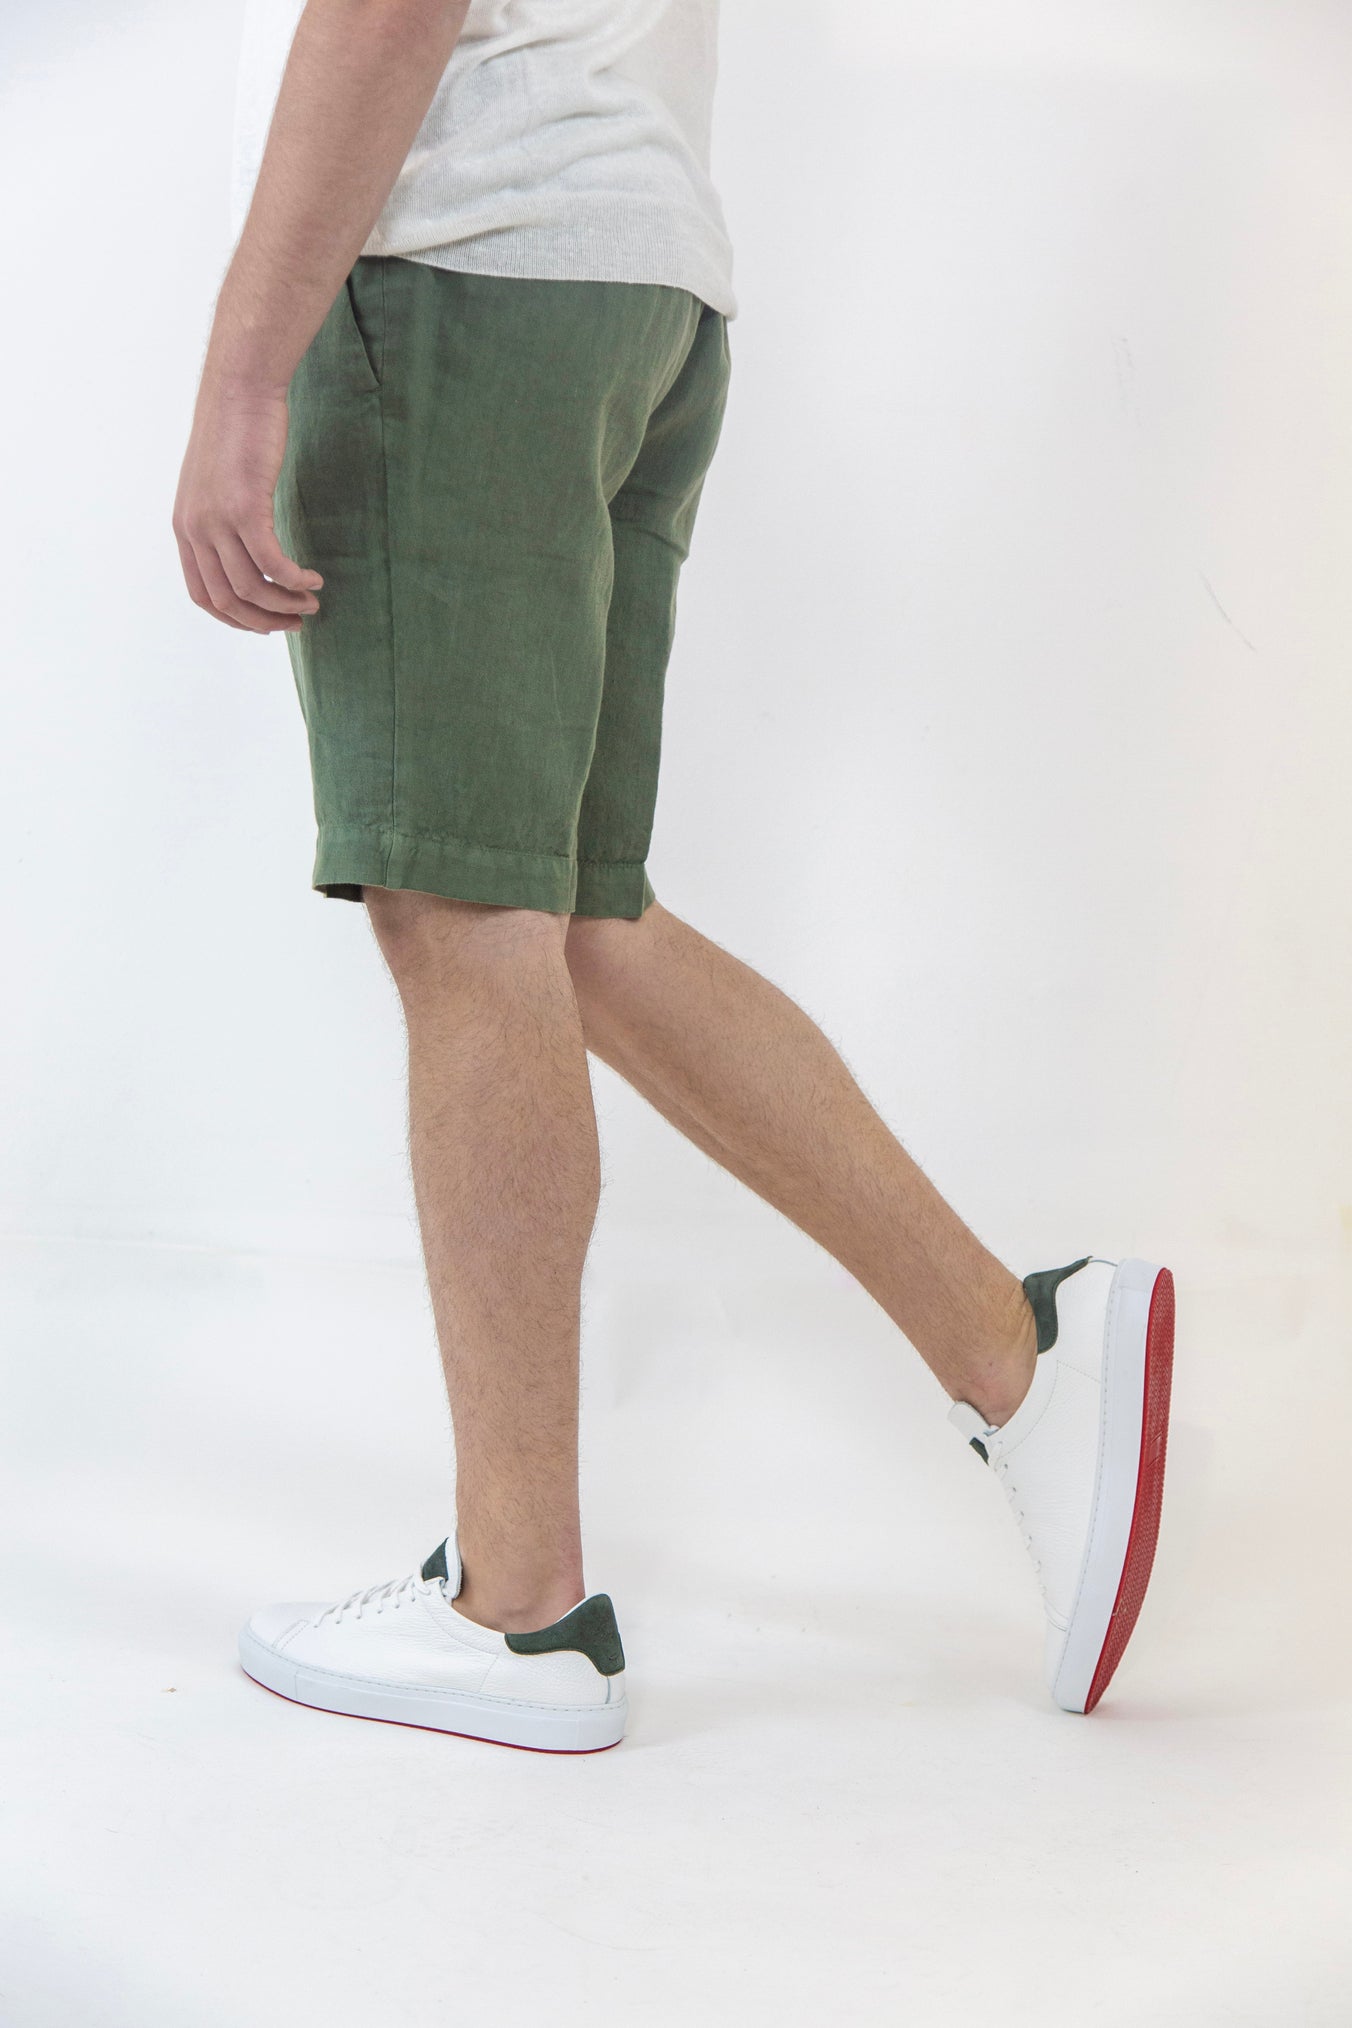 GUARINO Bermuda Shorts with Green Linen Drawstring